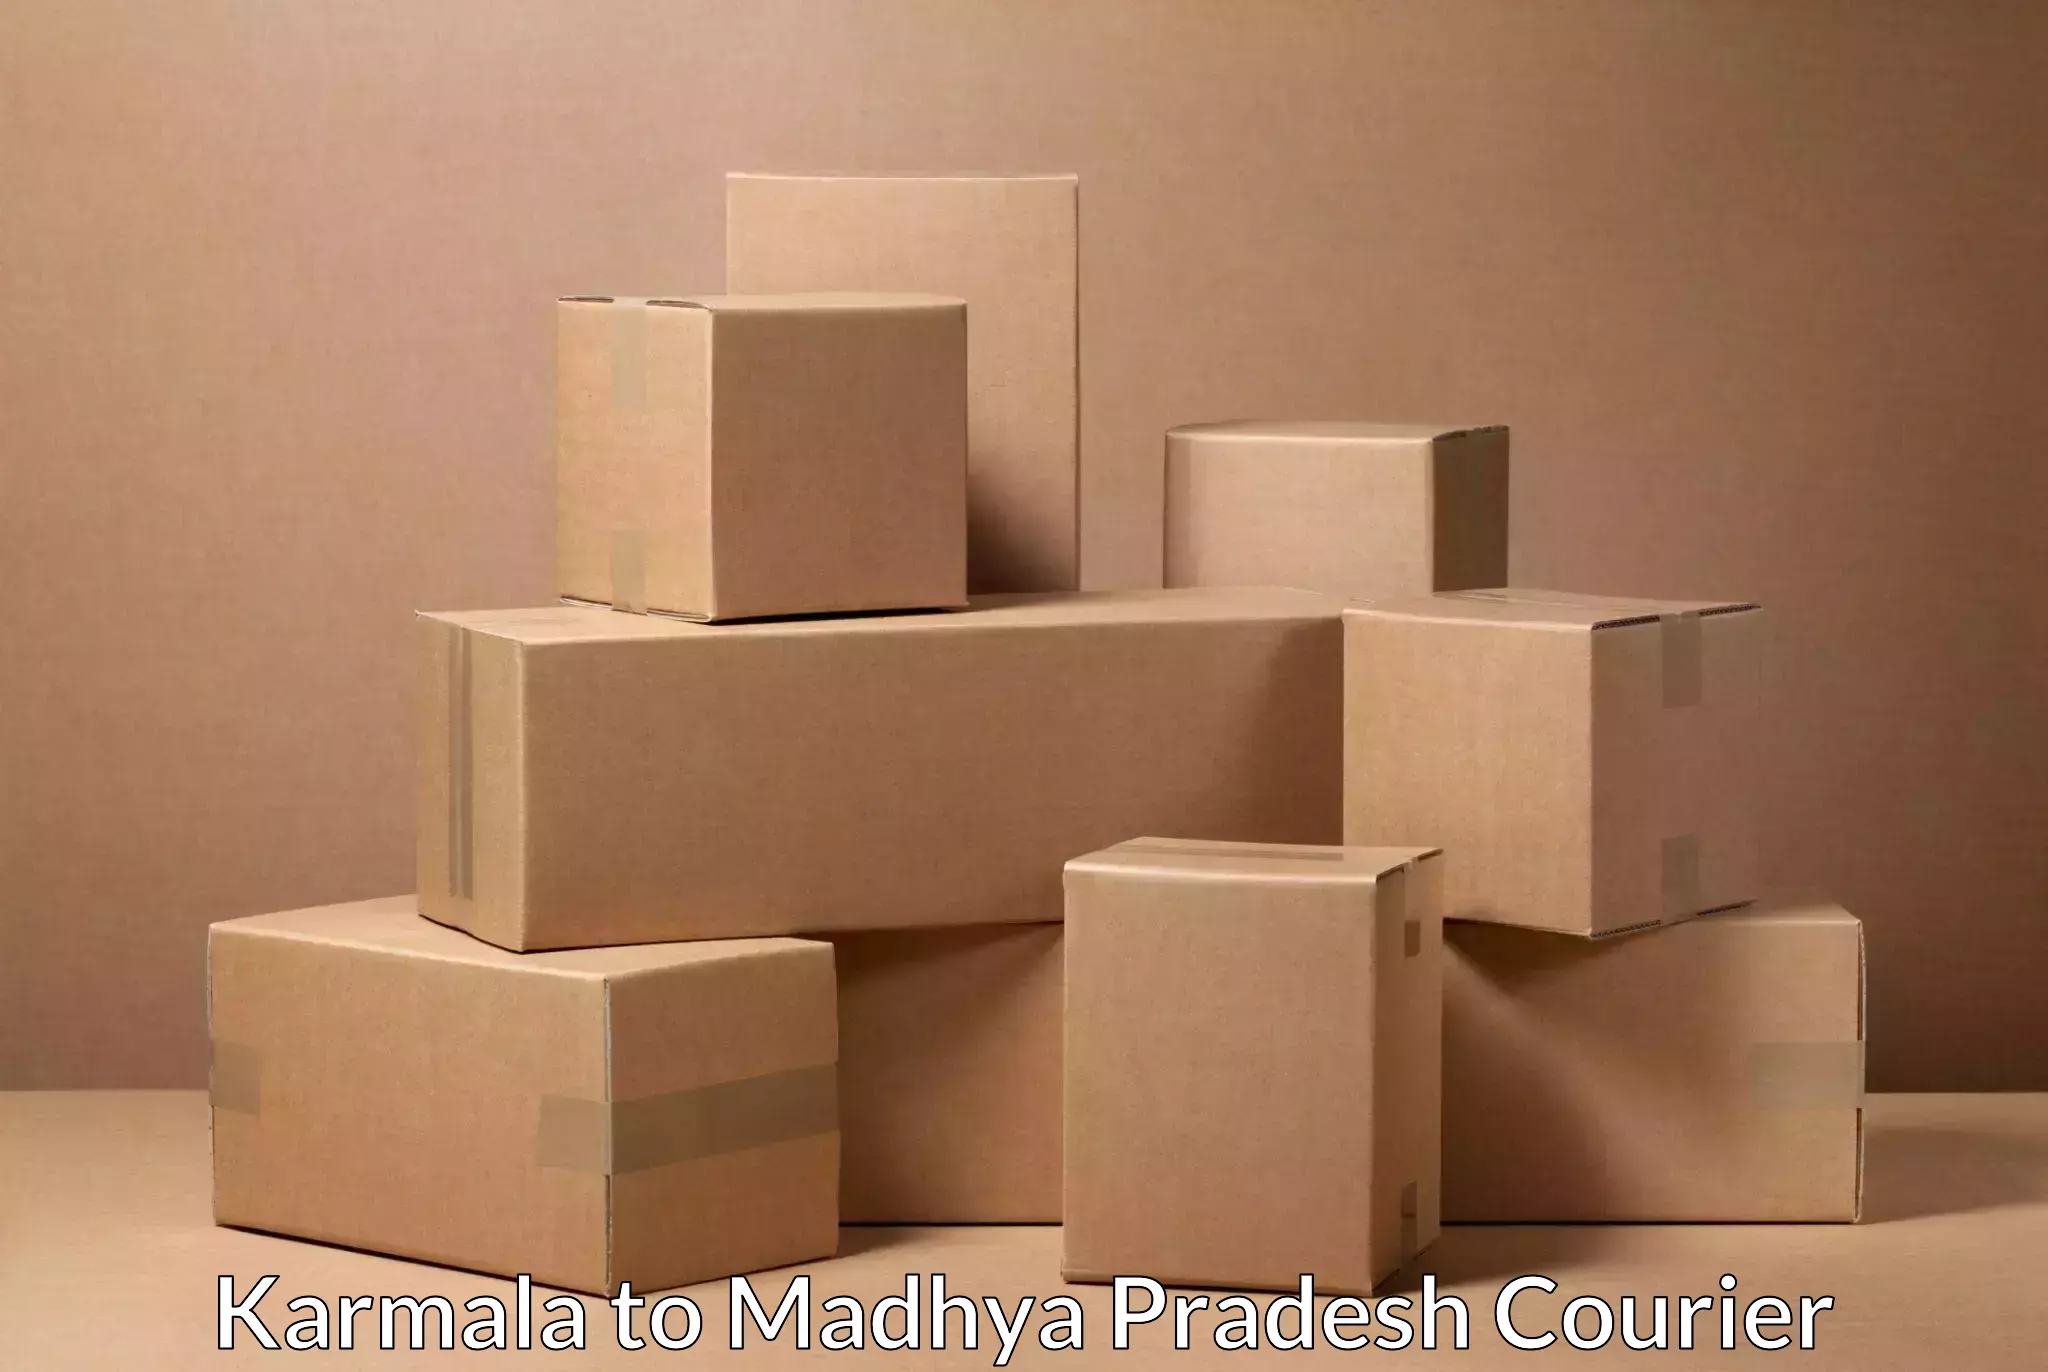 Efficient cargo handling Karmala to Madhya Pradesh